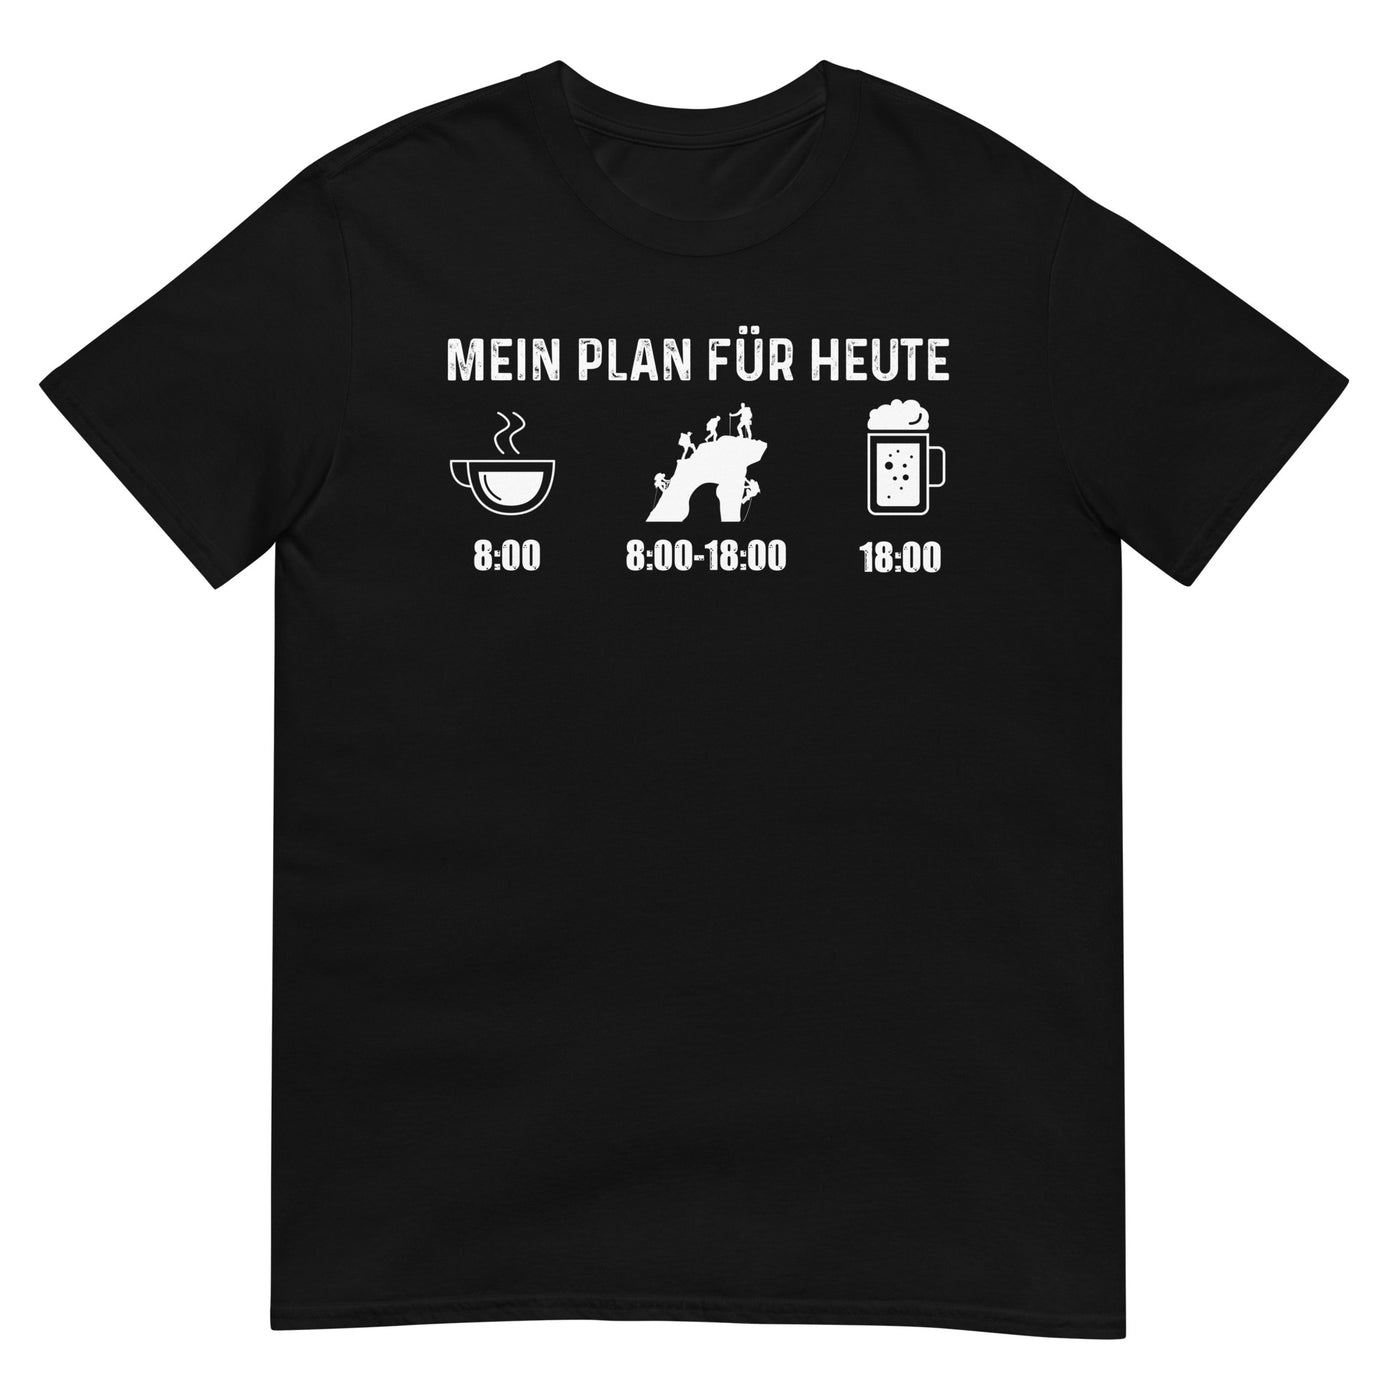 Mein Plan Für Heute - T-Shirt (Unisex) klettern xxx yyy zzz Black